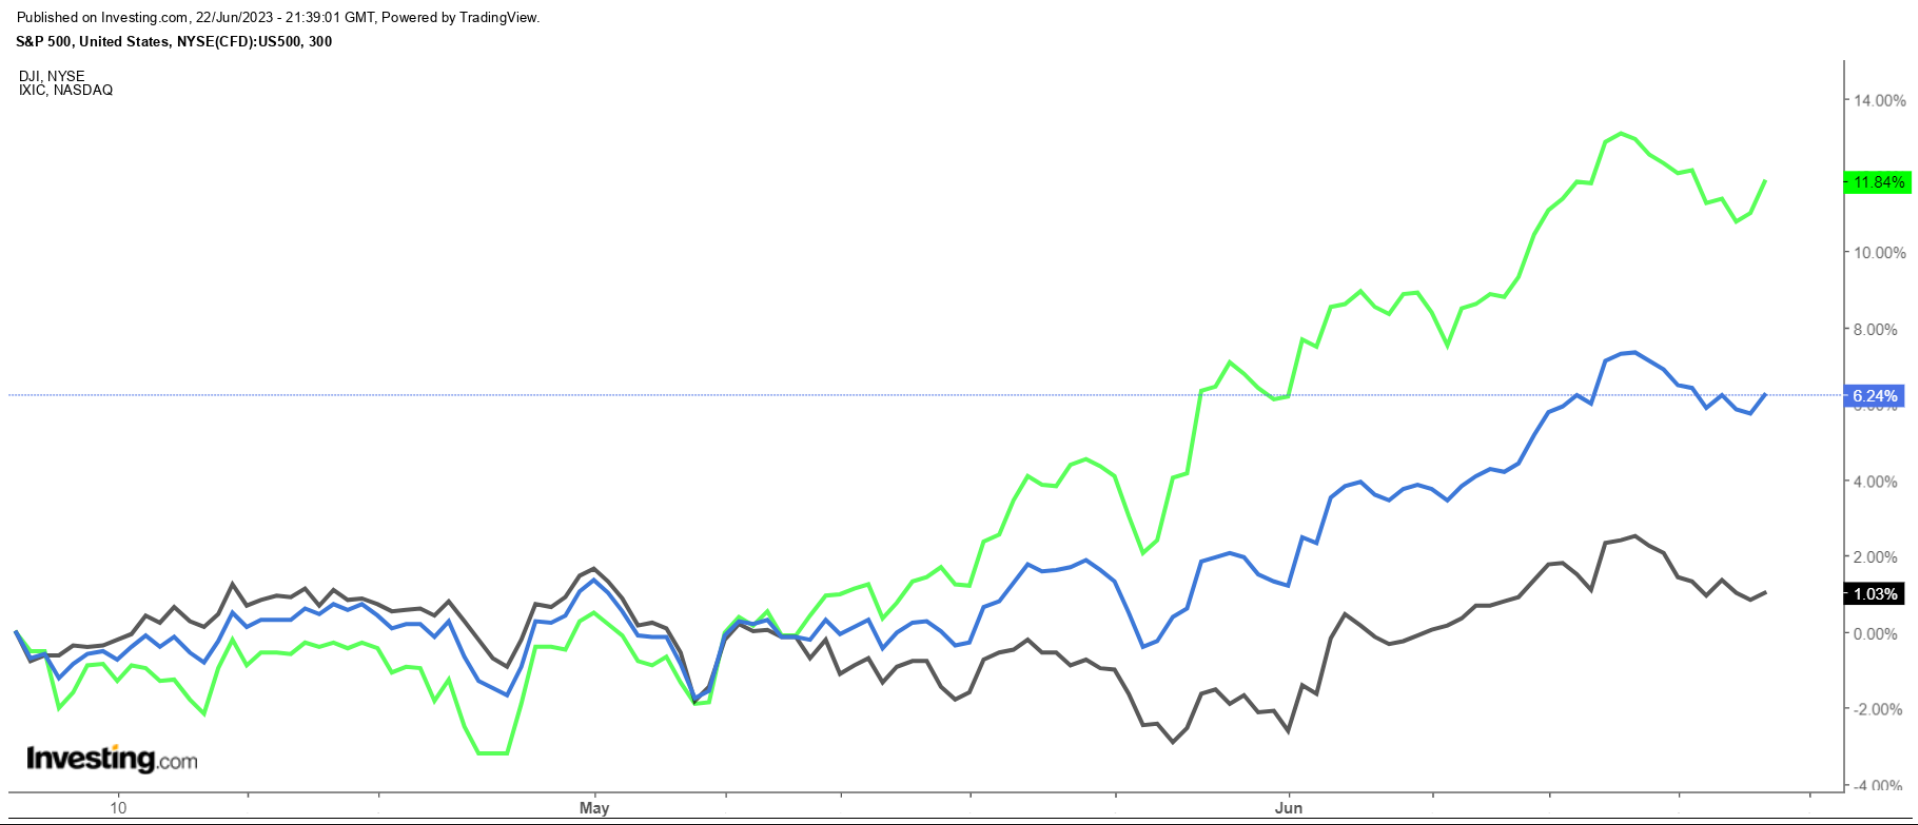 Nasdaq, DOW, S&P 500 YTD Price Performance